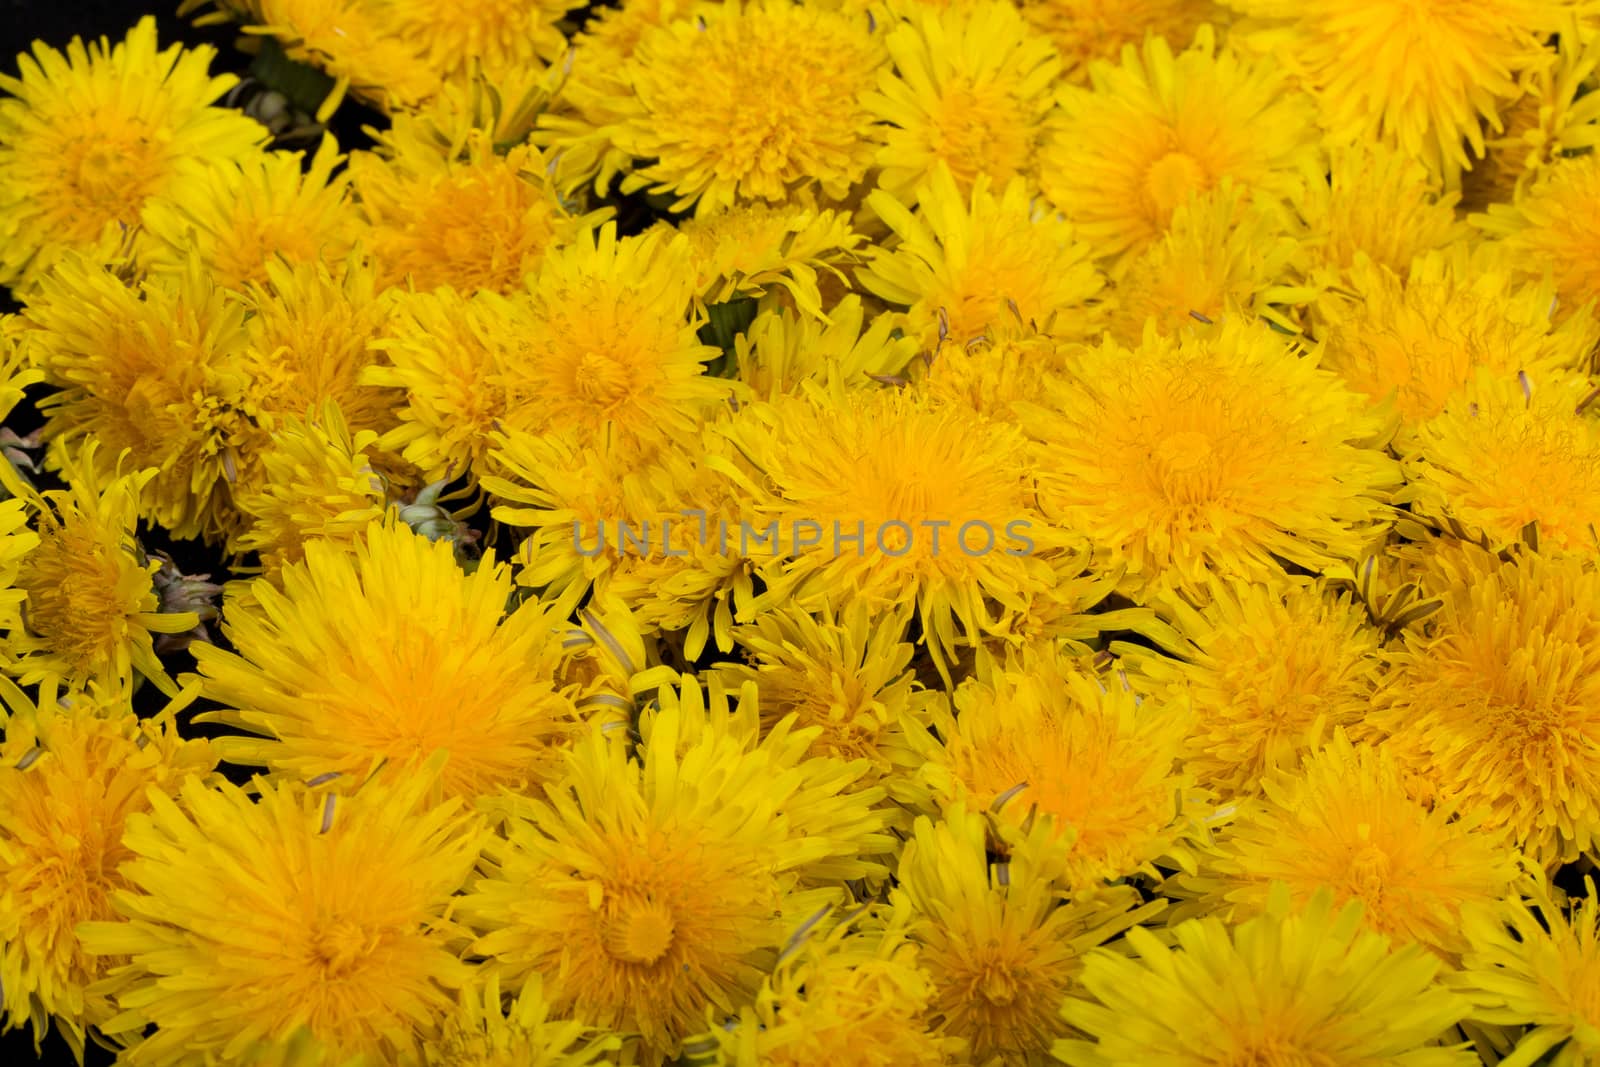 beautiful yellow flower of Dandelion